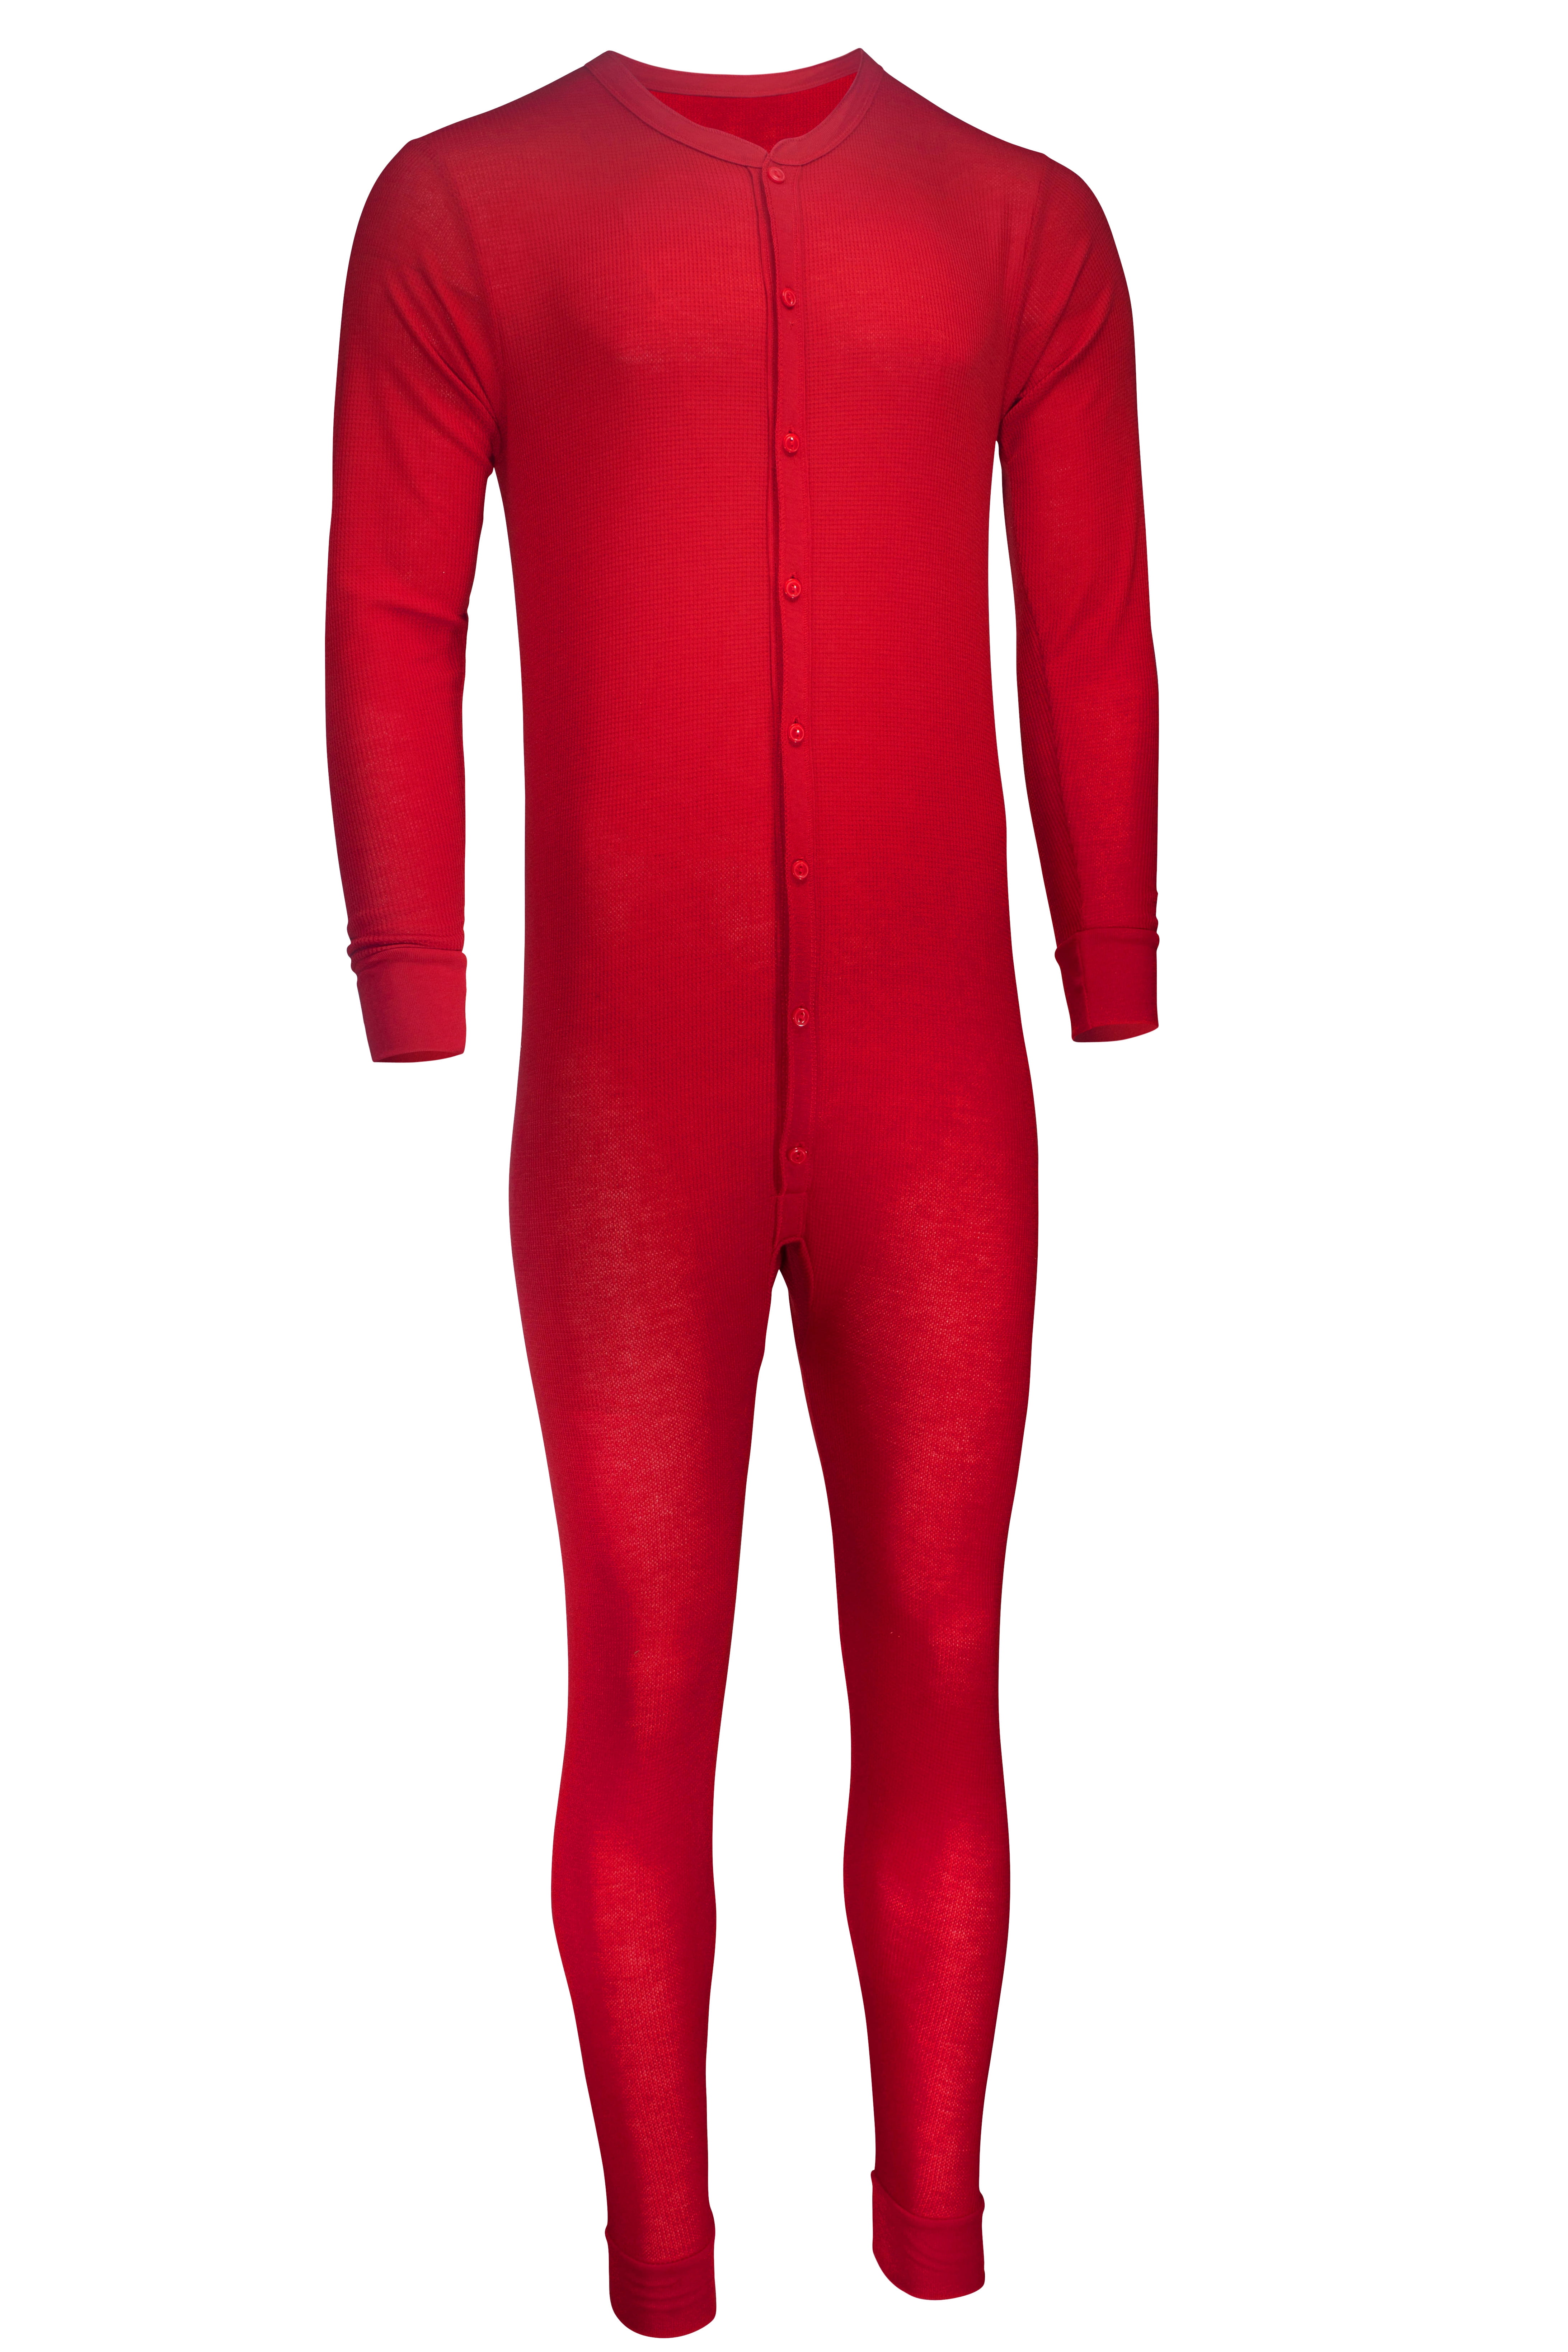 North 15 Mens Waffle Union Suit Underwear-90U-Red-4XL - Walmart.com